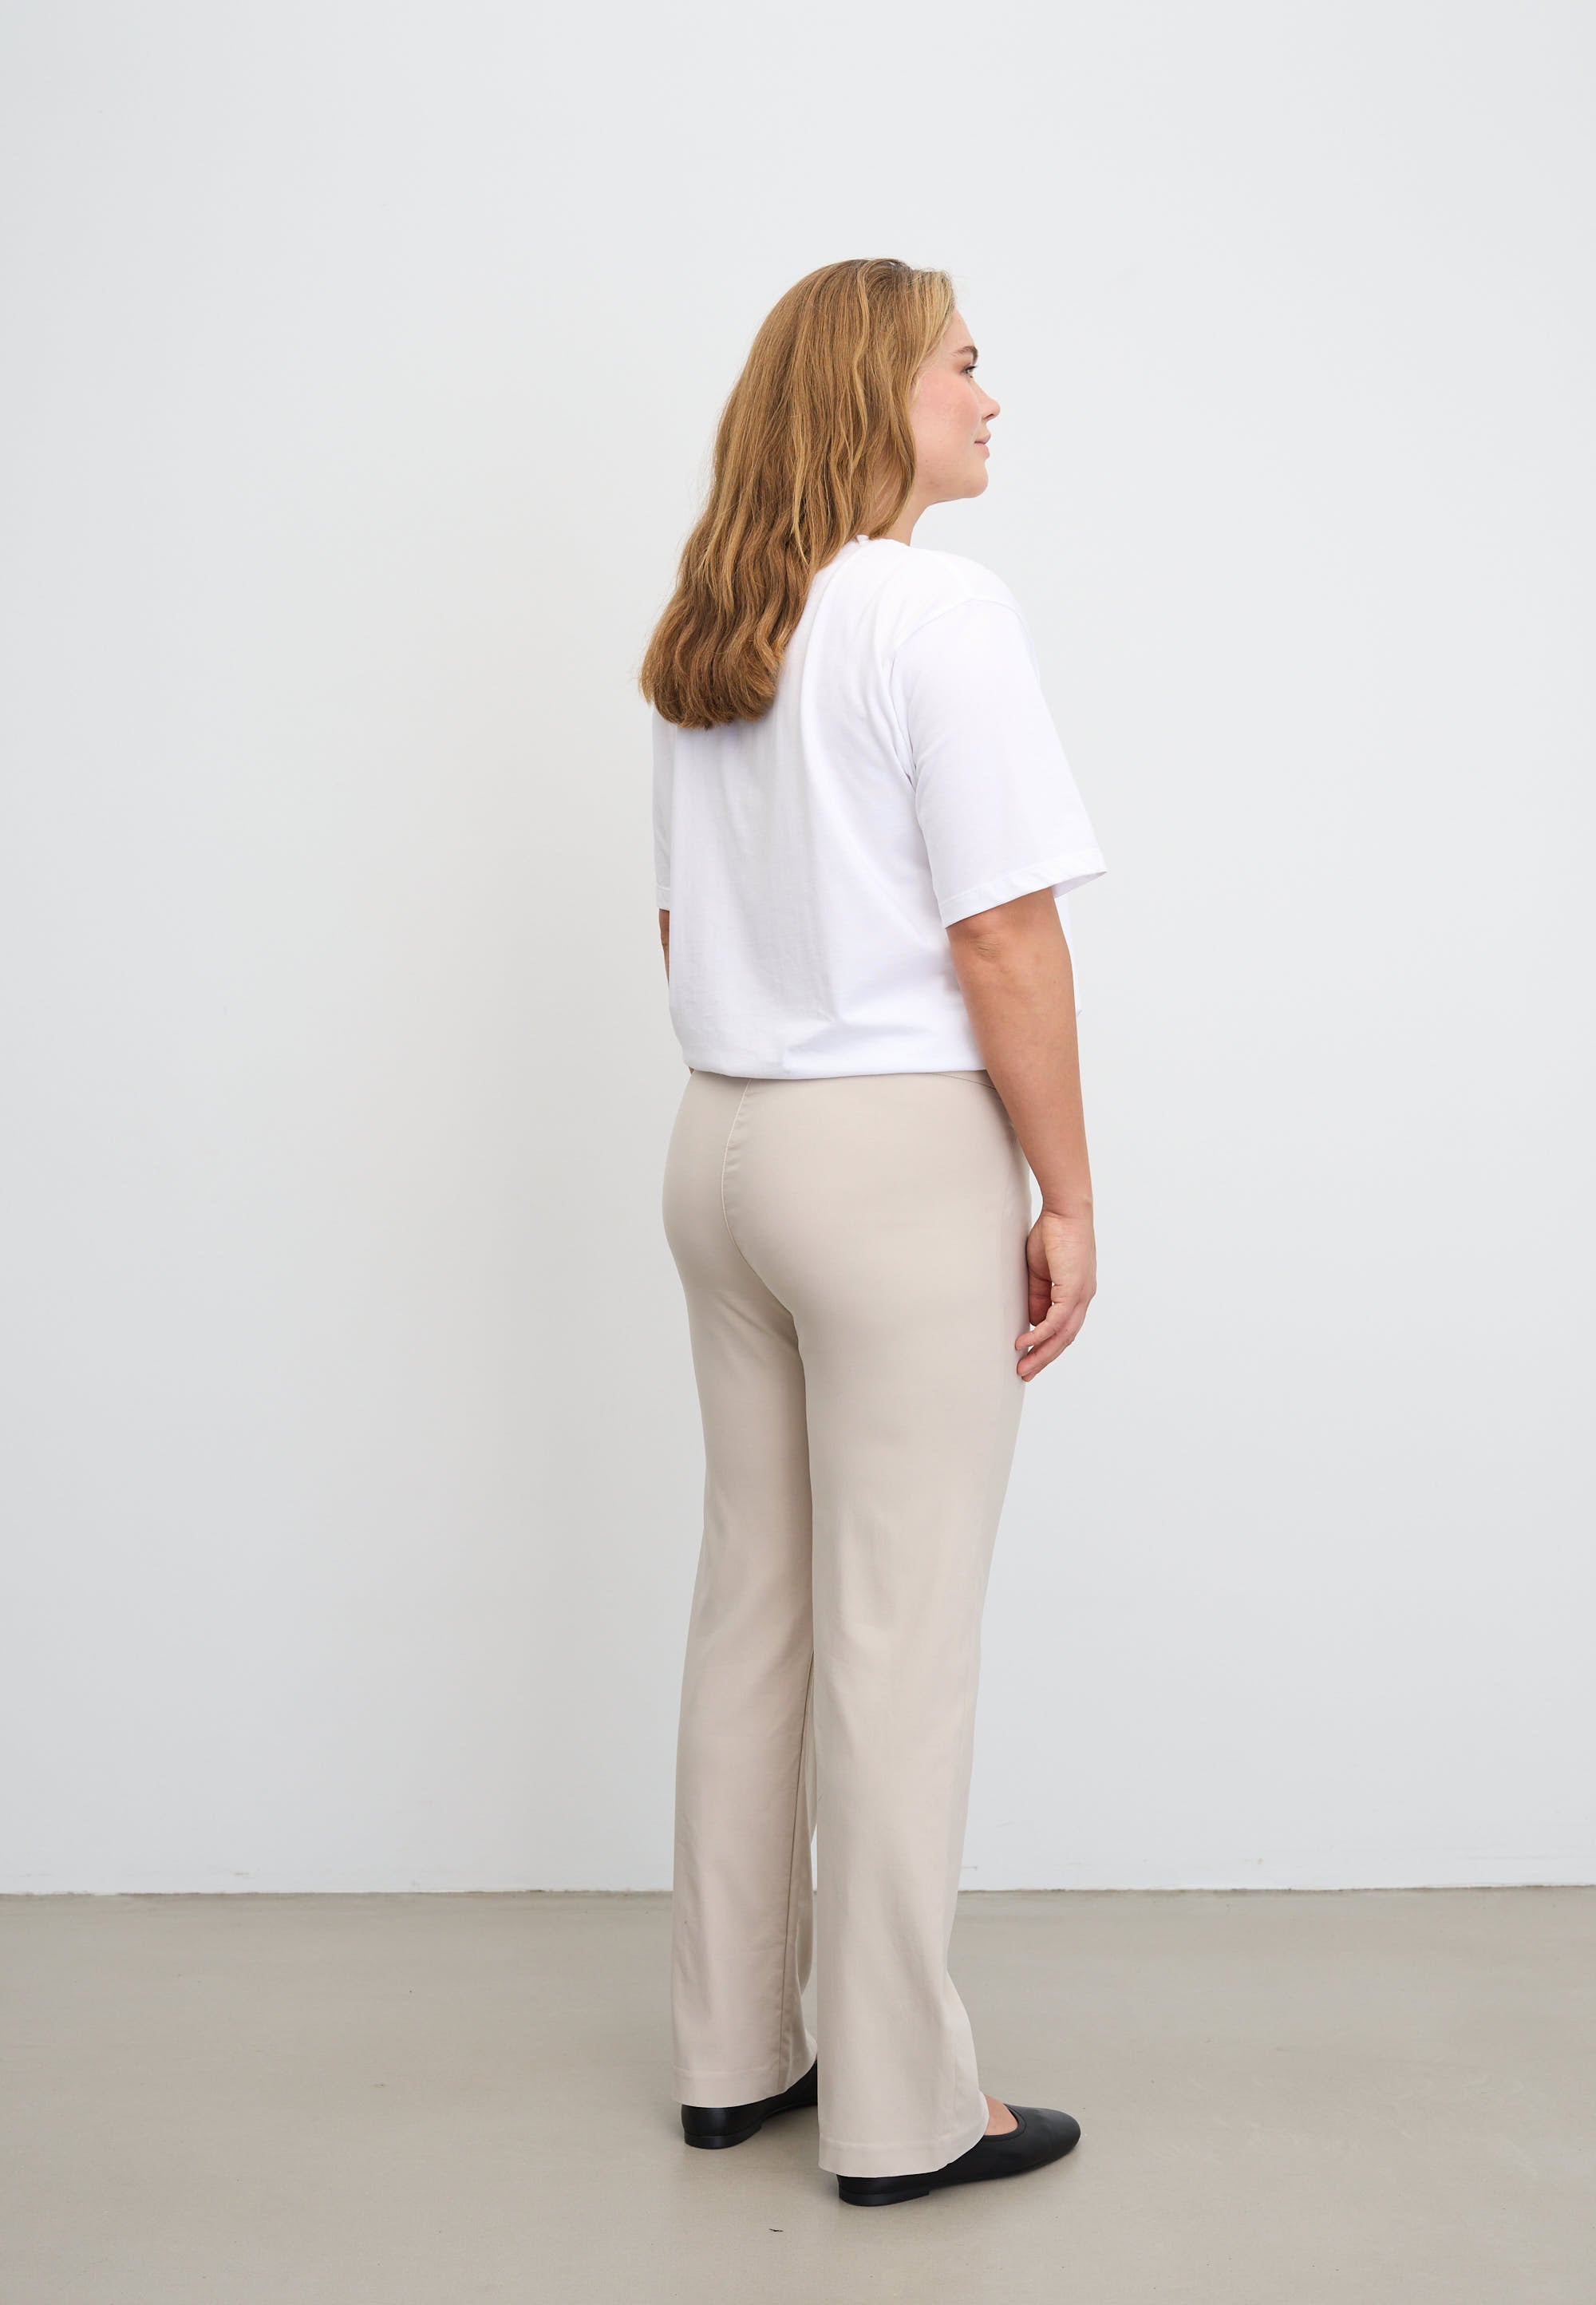 LAURIE Thea Straight - Medium Length Trousers STRAIGHT Grau sand